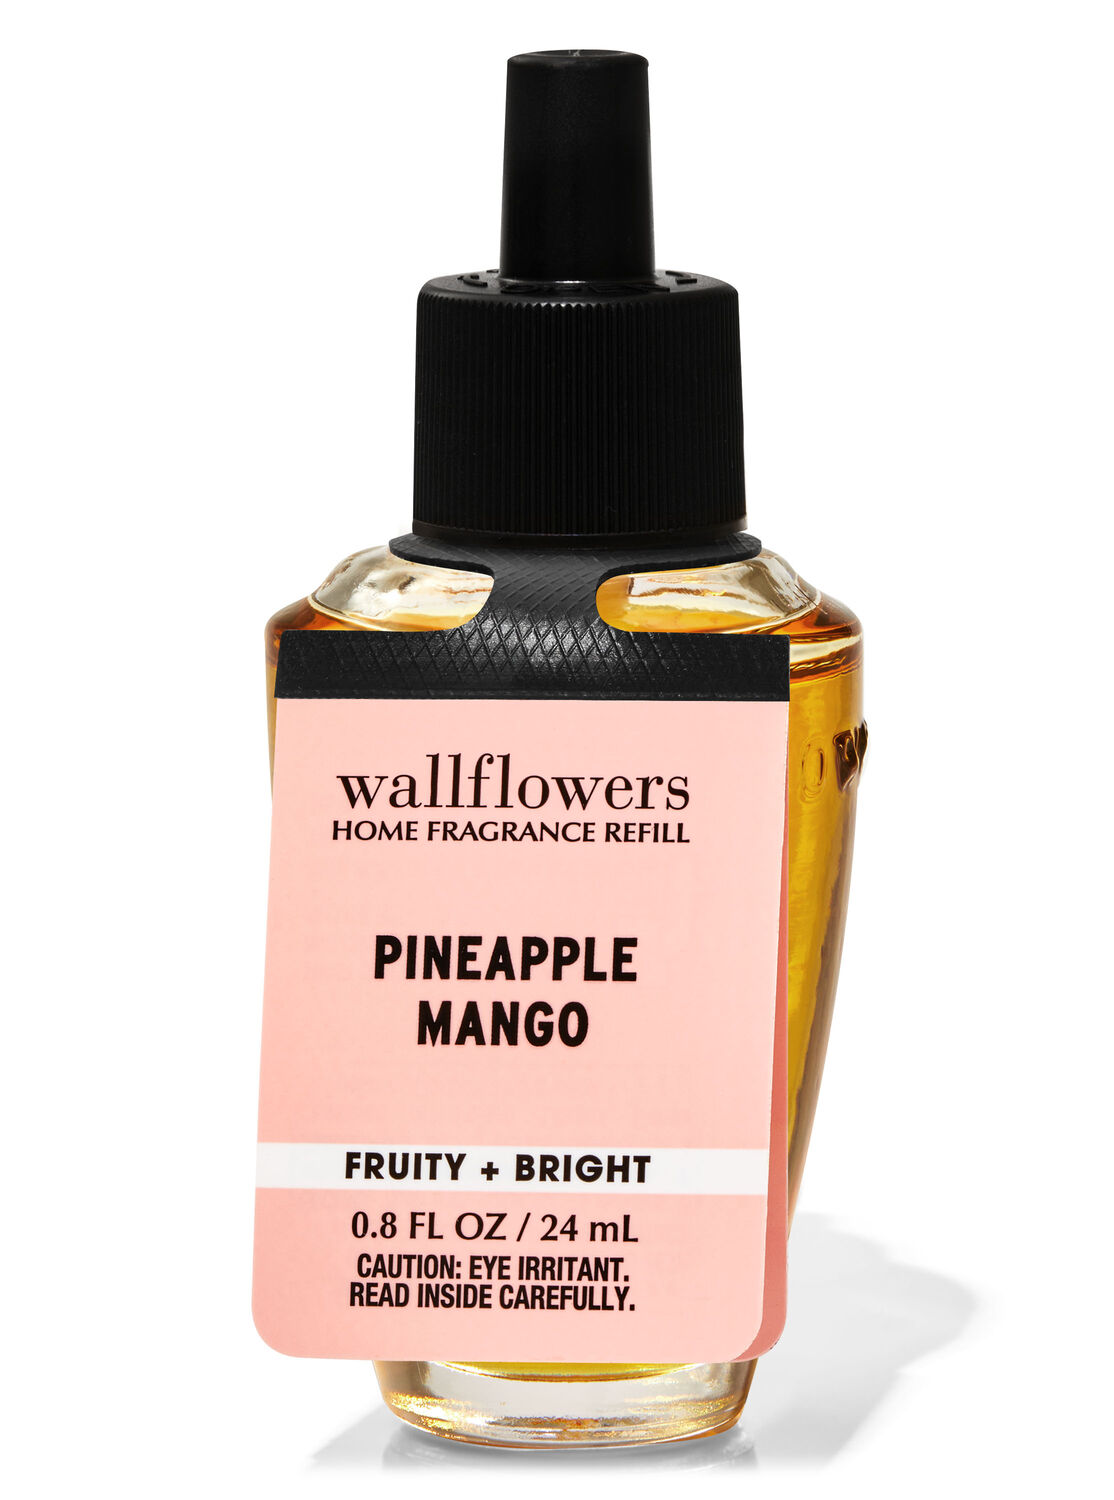 Pineapple Mango